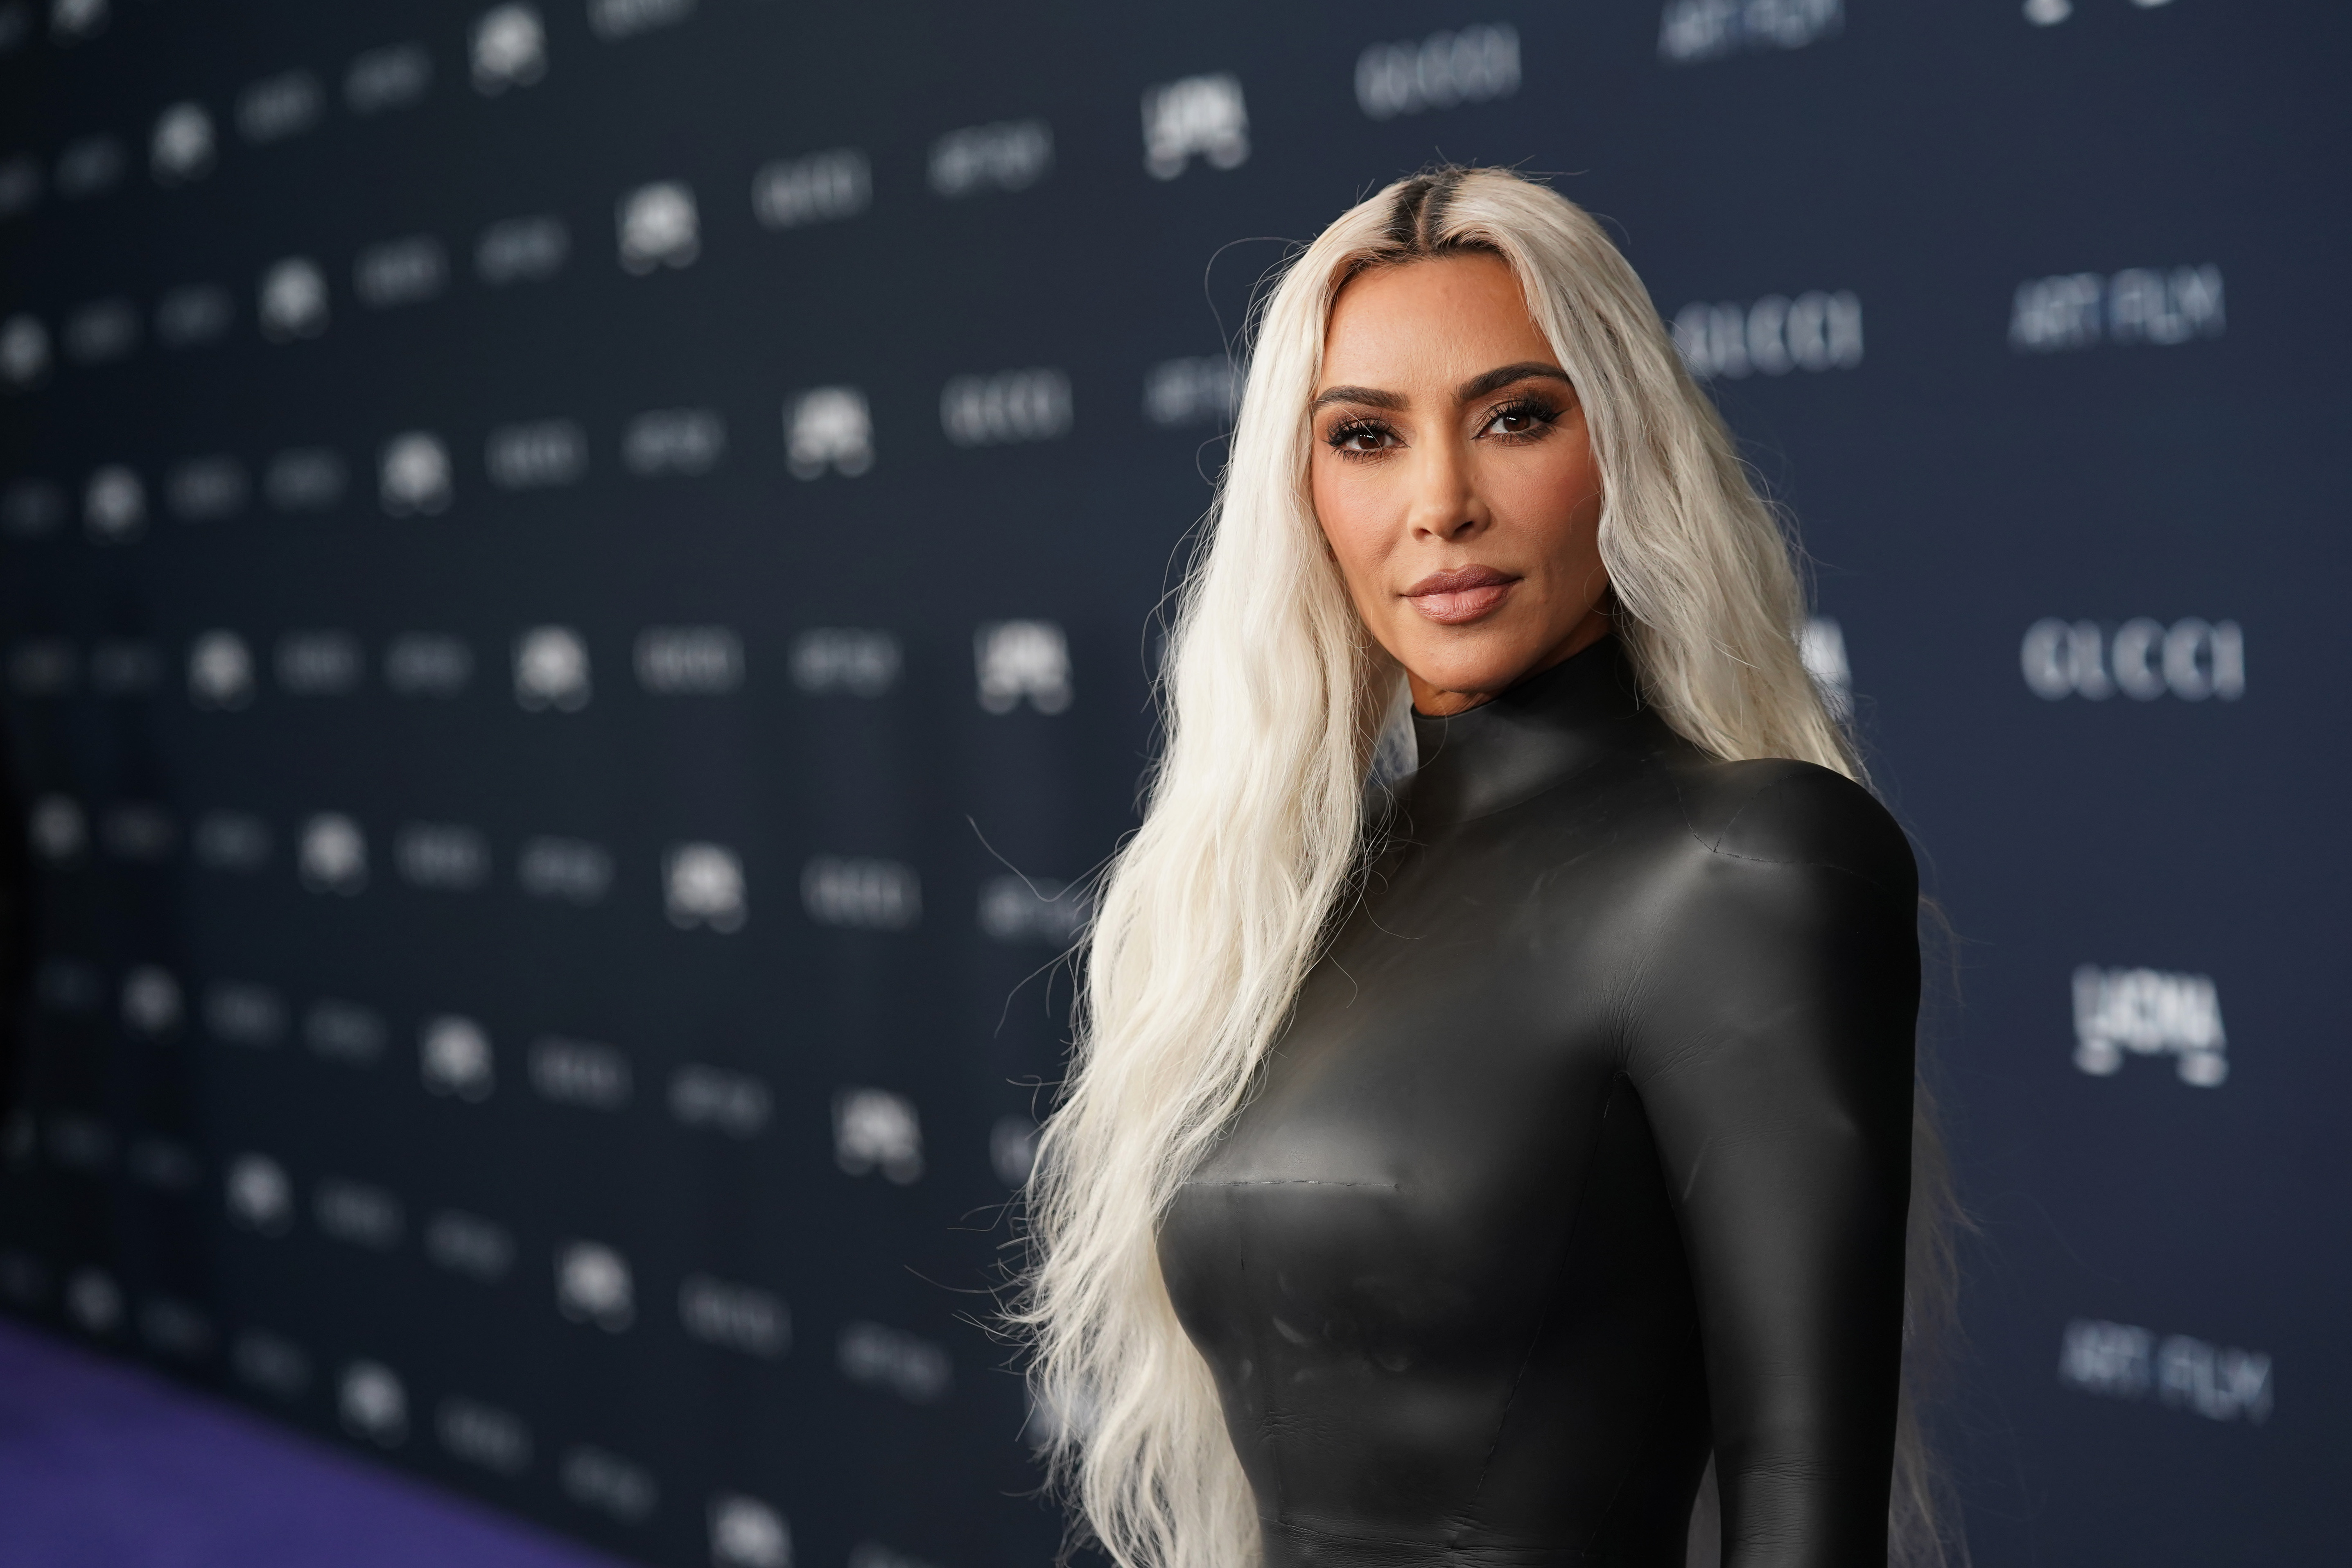 Businesswoman and 'influencer' Kim Kardashian, at the 2022 LACMA Art+Film Gala.